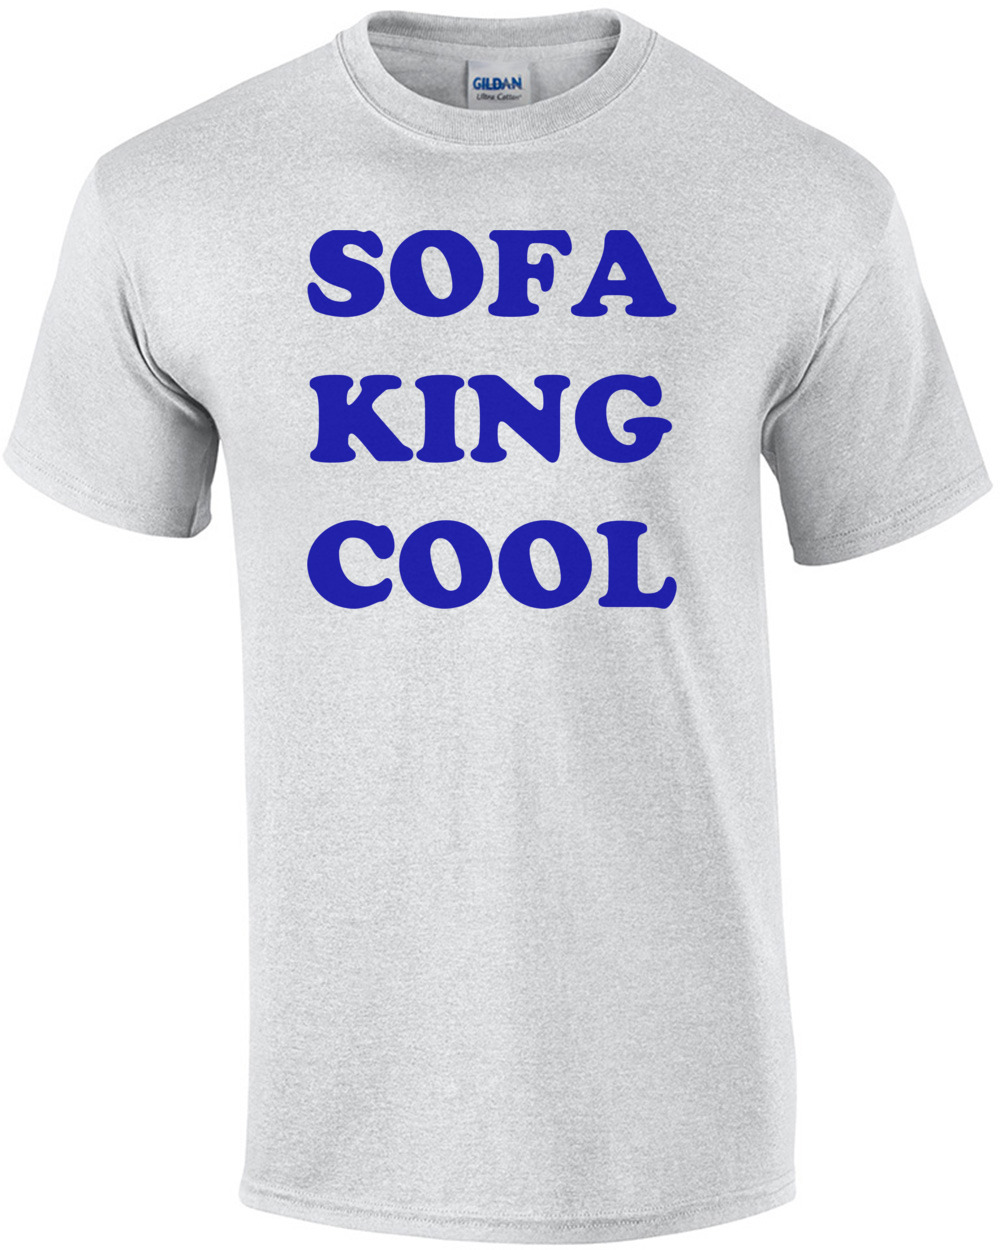 sofa king cool shirt